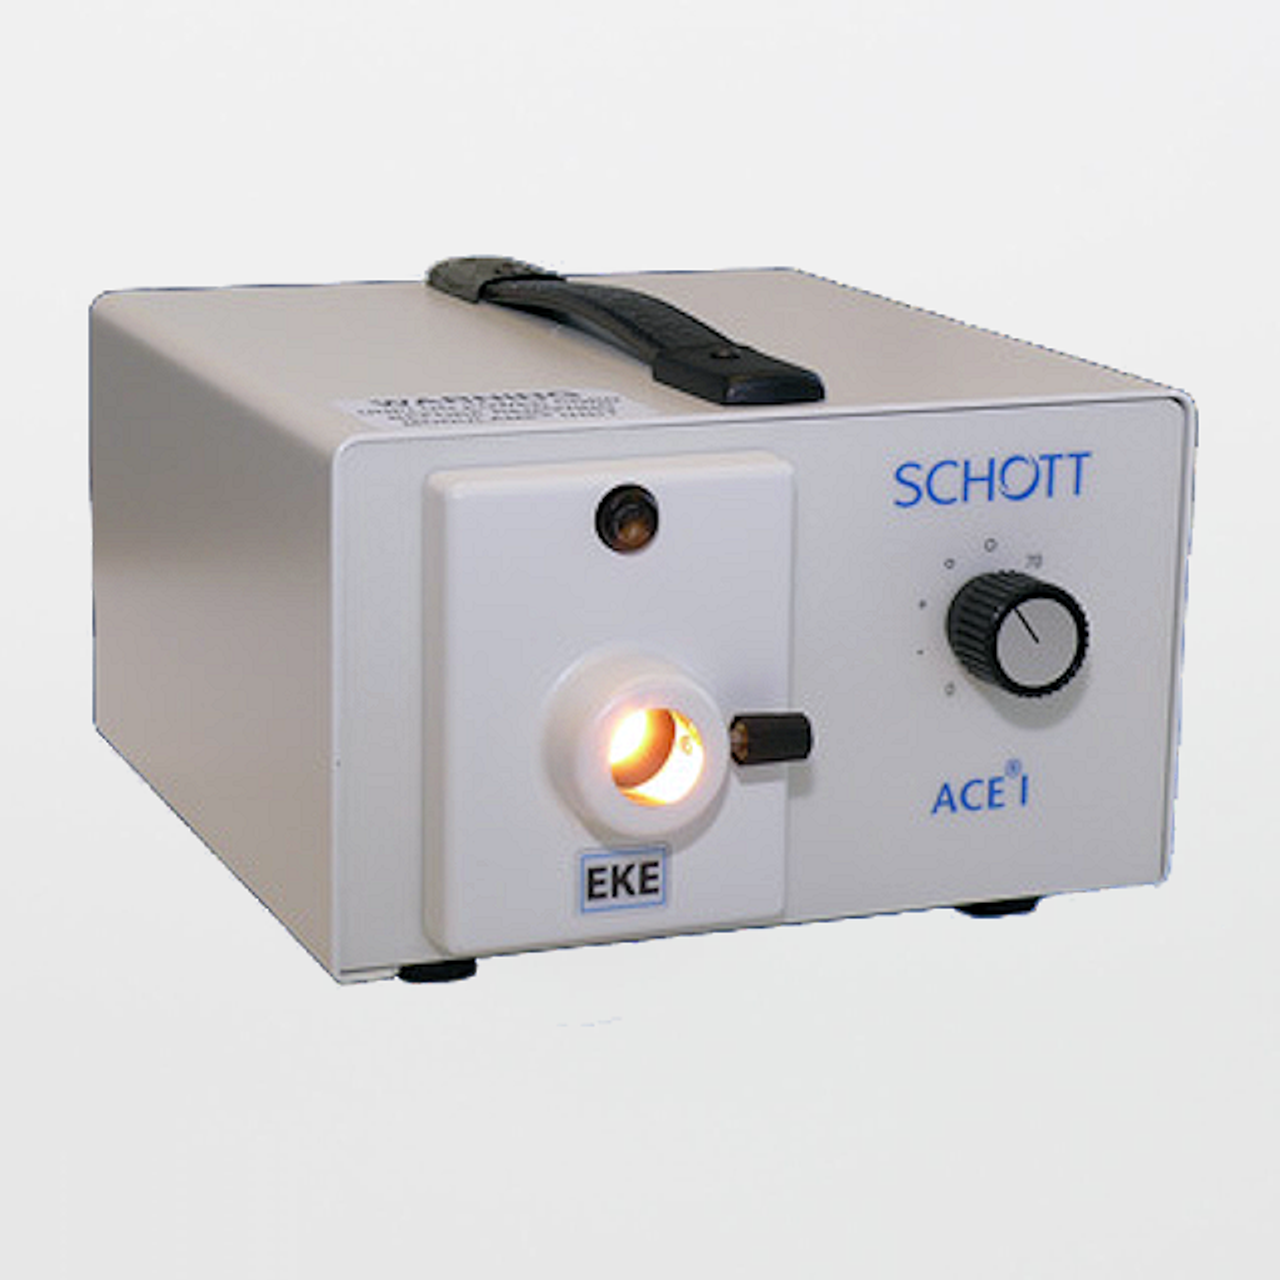 SCHOTT A20500 ACE Fiber Light Source Illuminator